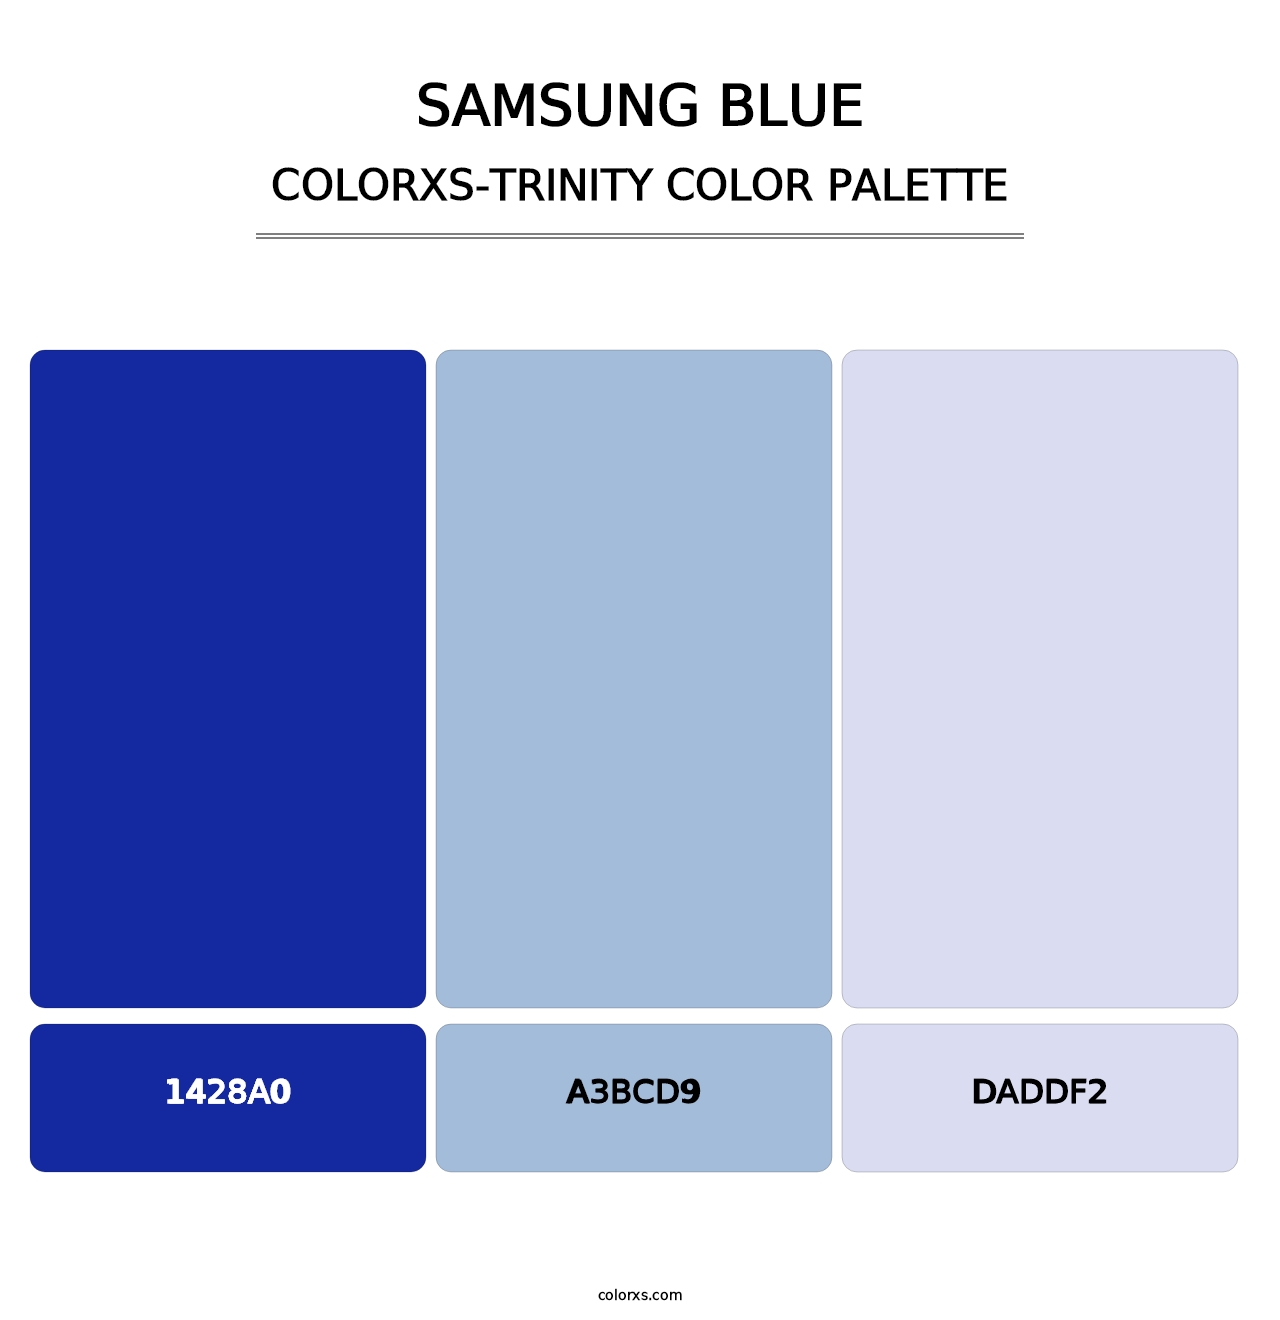 Samsung Blue - Colorxs Trinity Palette